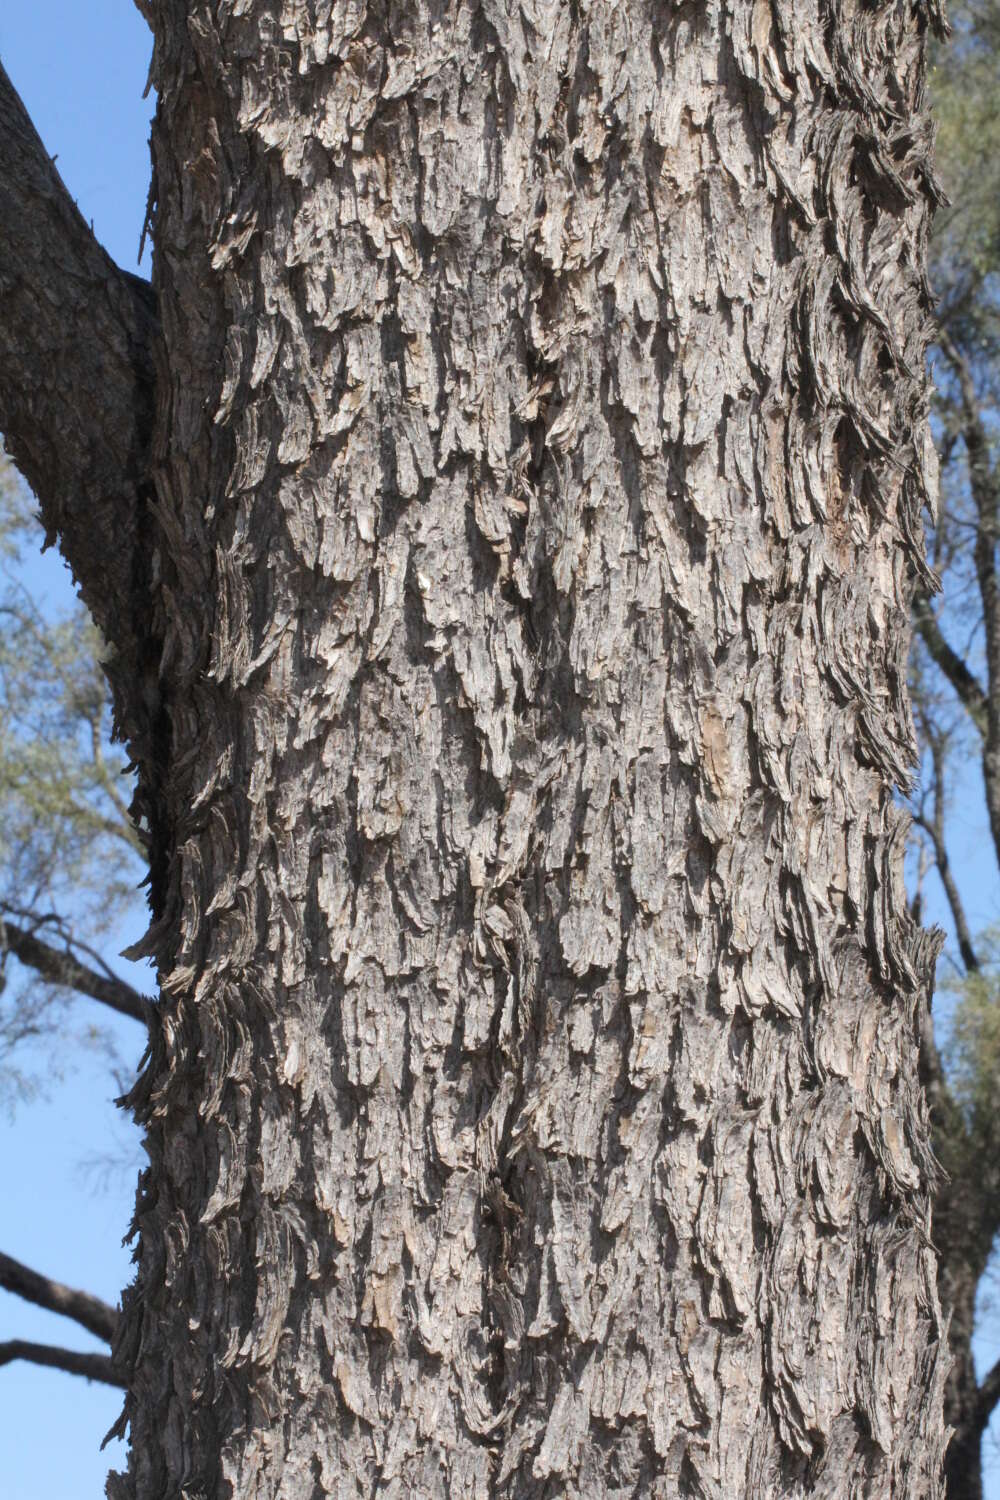 Sivun Acacia cambagei R. T. Baker kuva